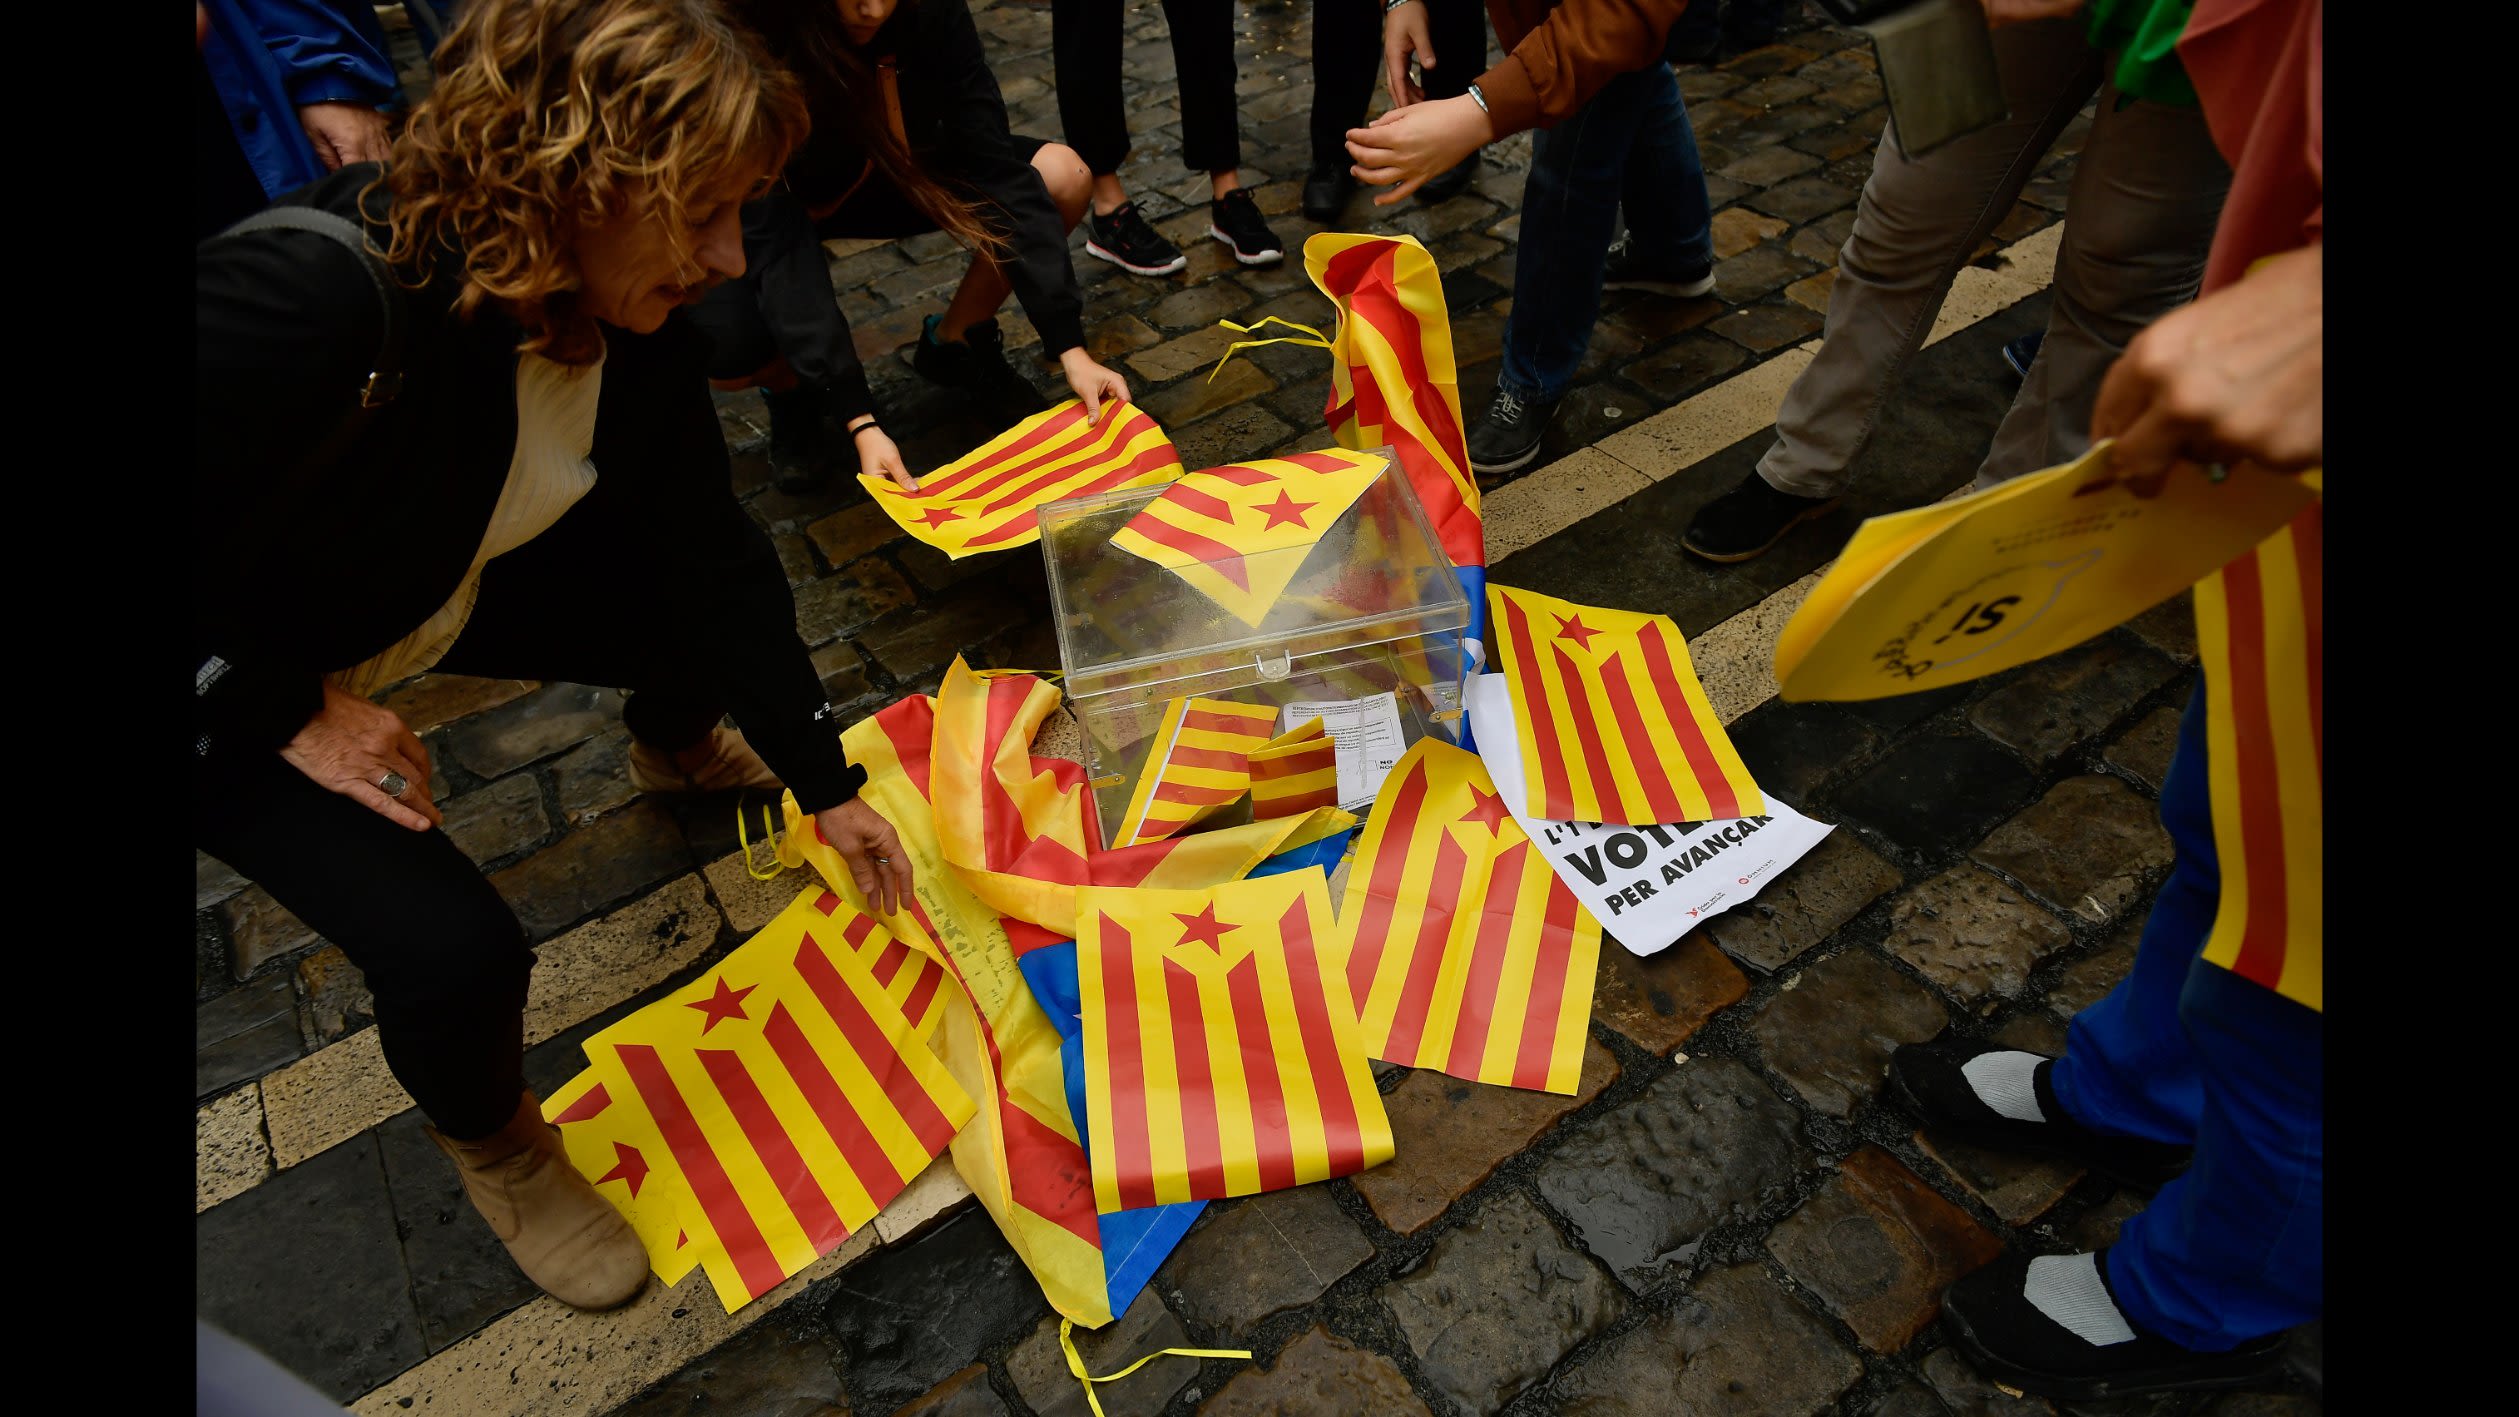 Catalonia political crisis unnerves Spanish markets